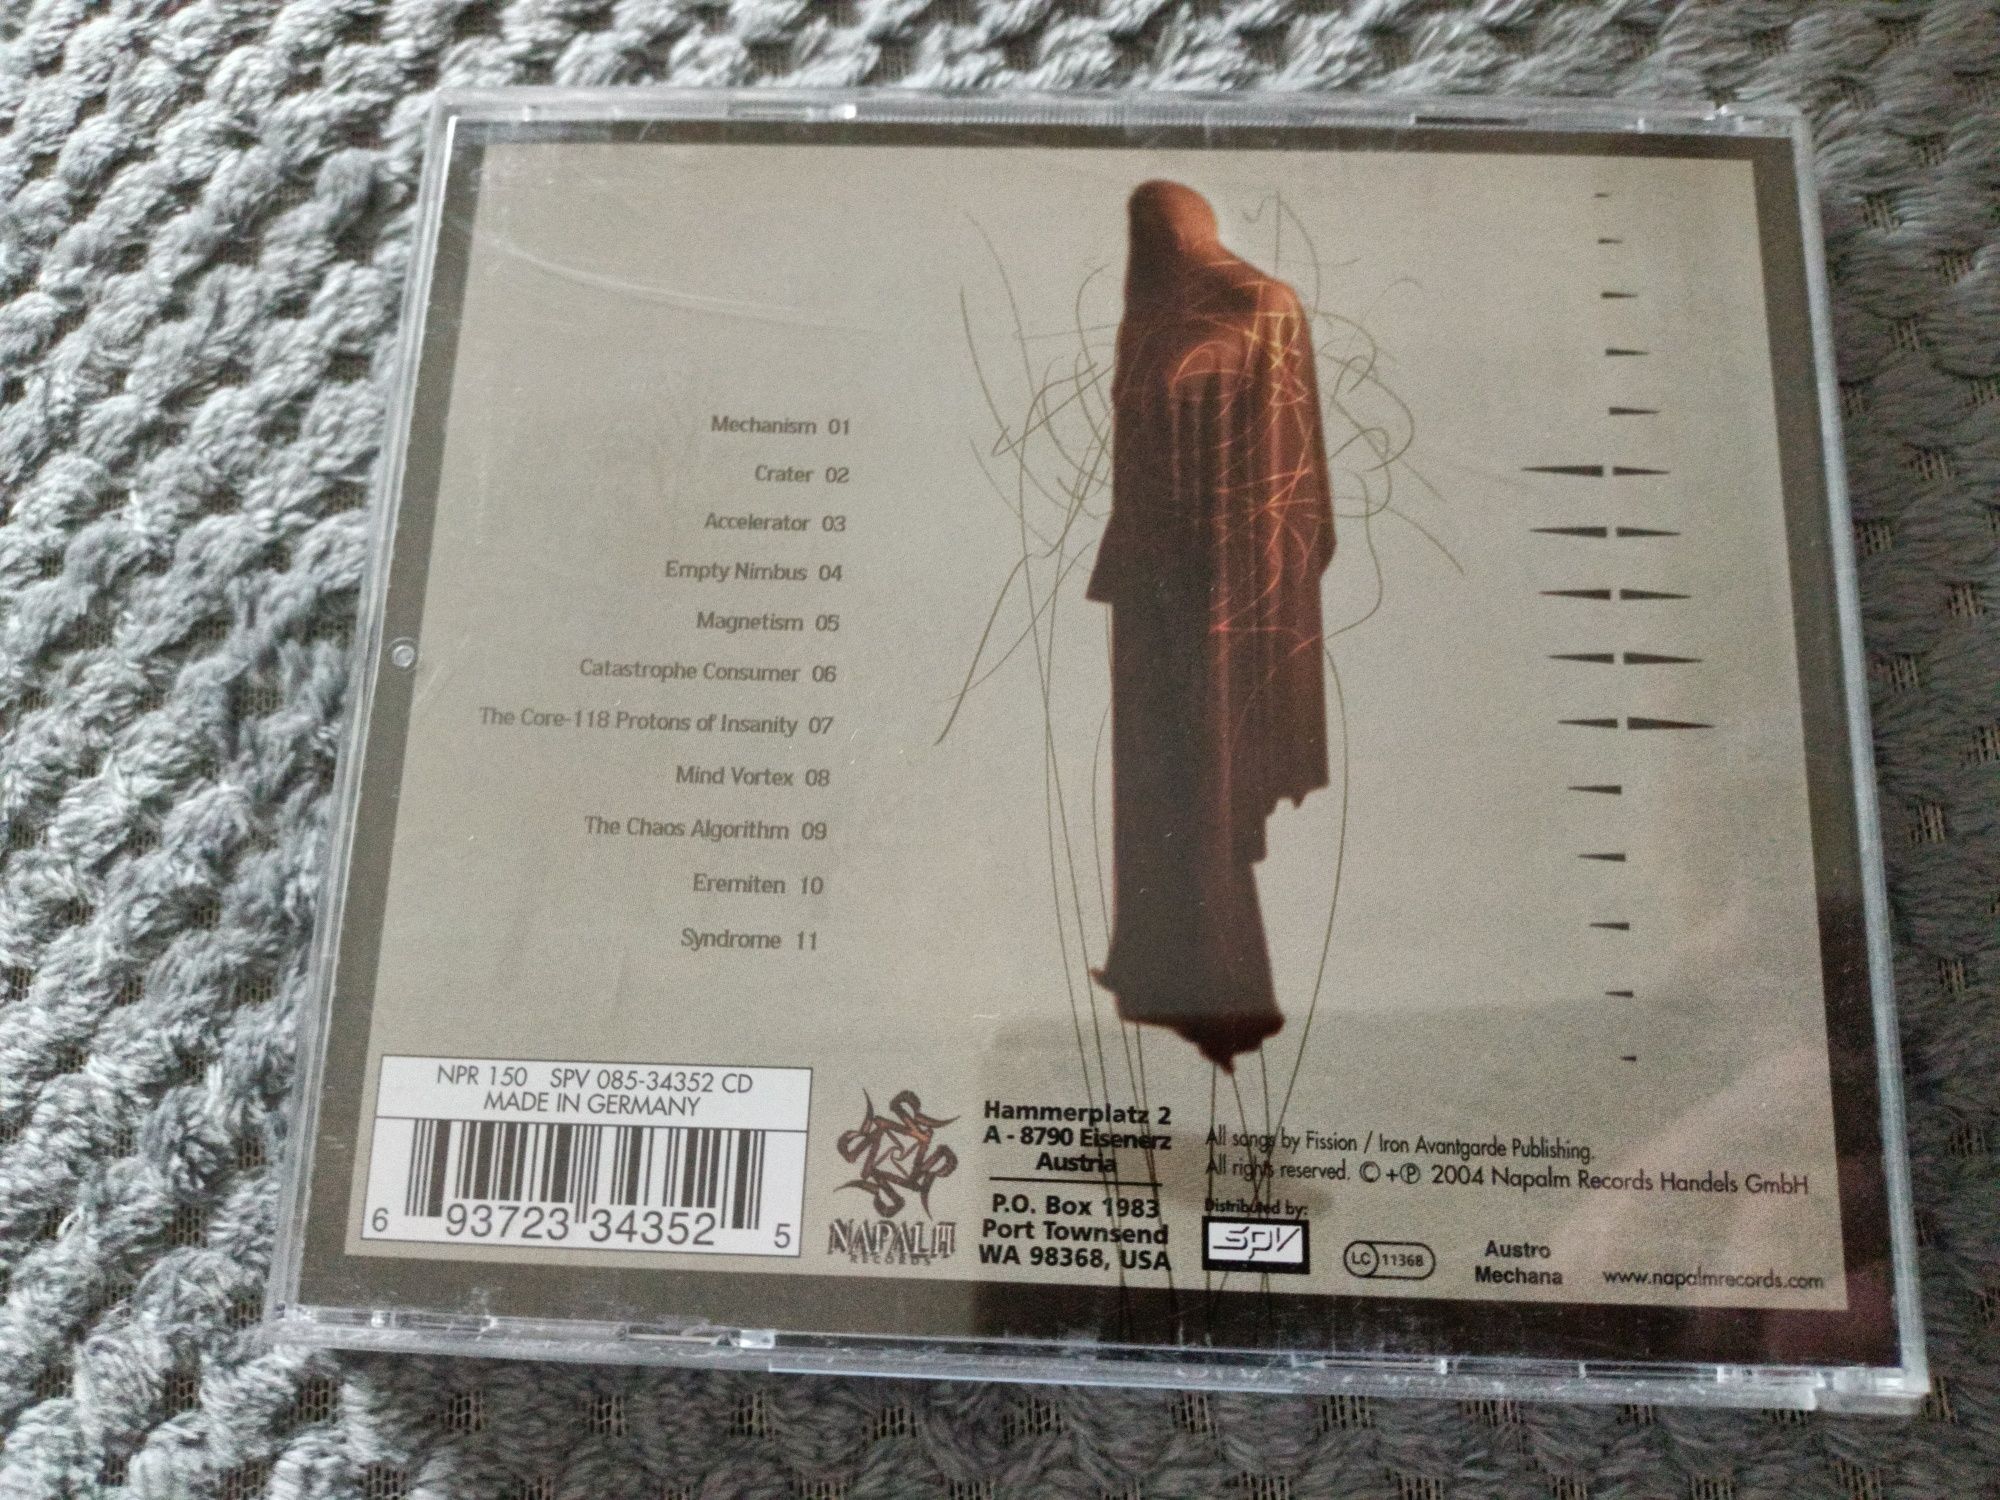 Fission - Crater (CD, Album)(Melodic Death Metal)(ex)